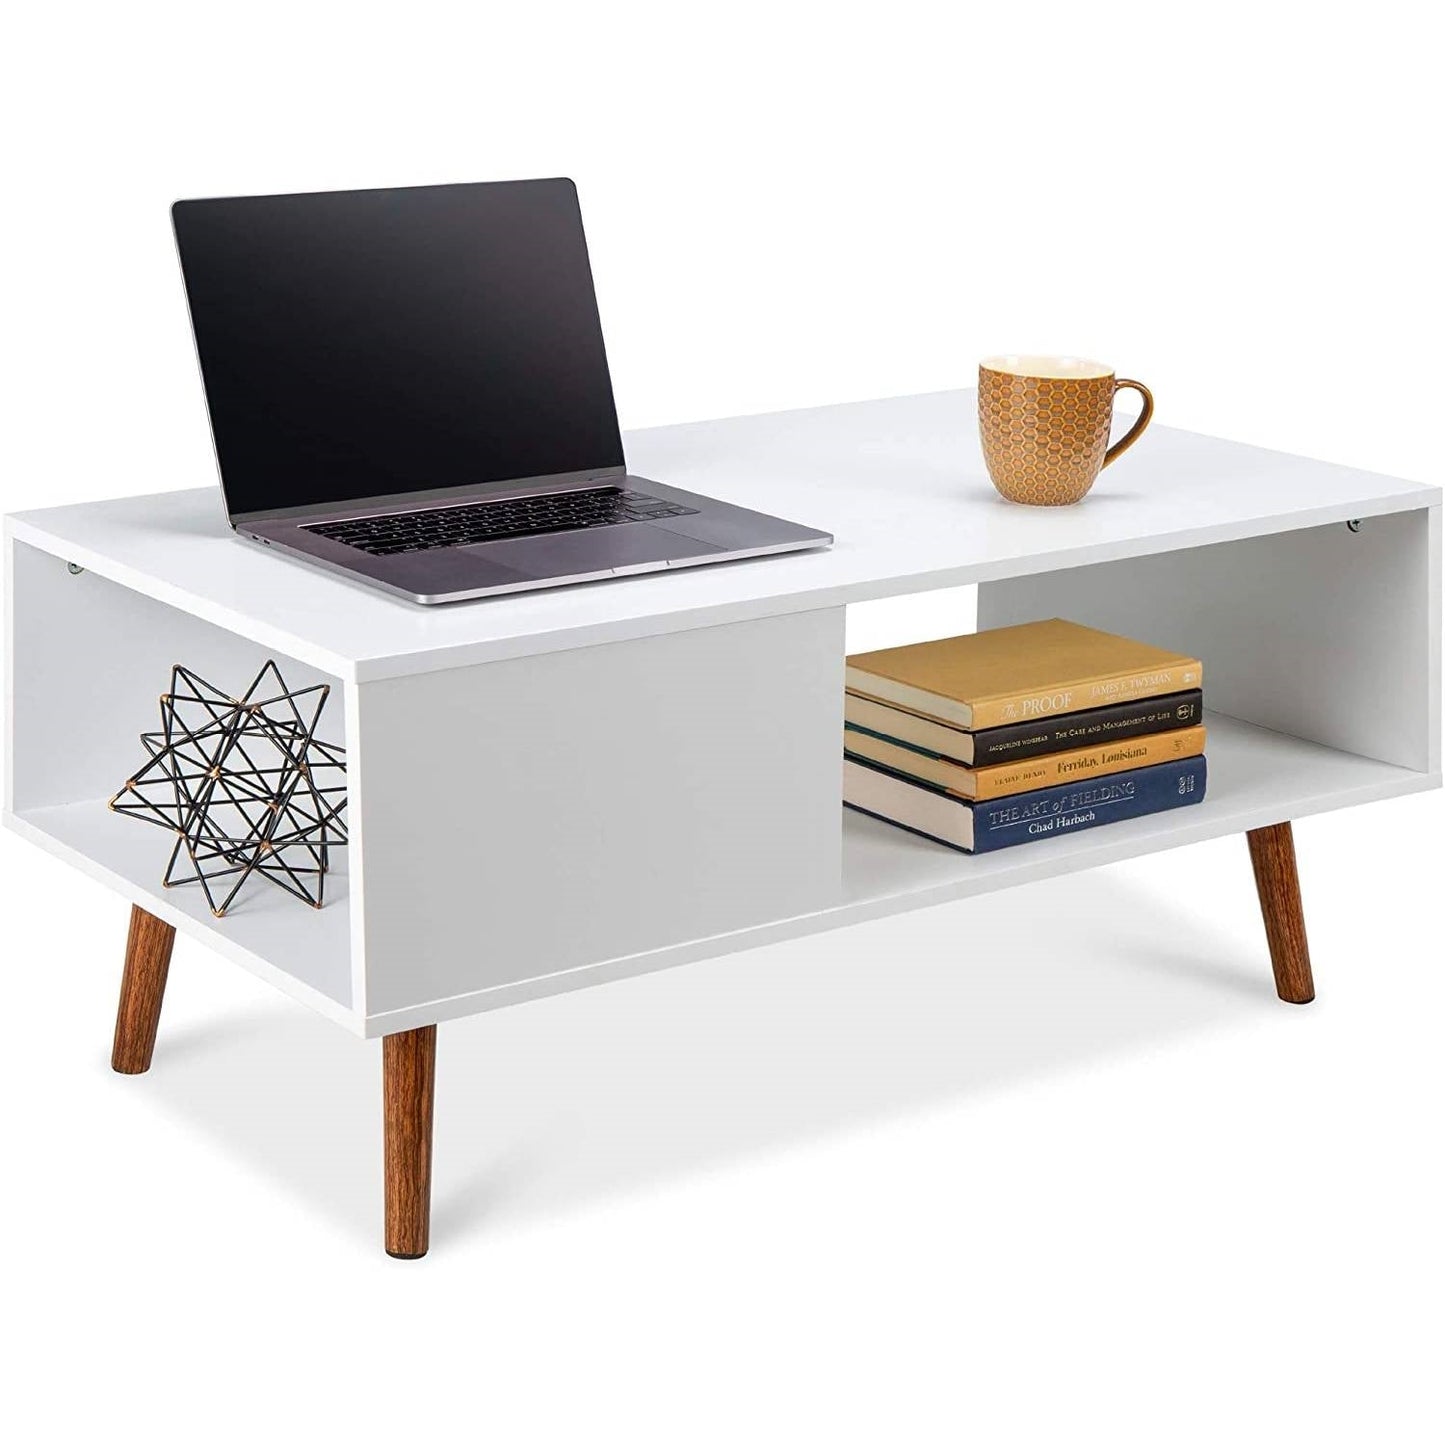 Living Room > Coffee Tables - Modern Mid-Century Style Coffee Table Living Room Storage In White Brown Wood